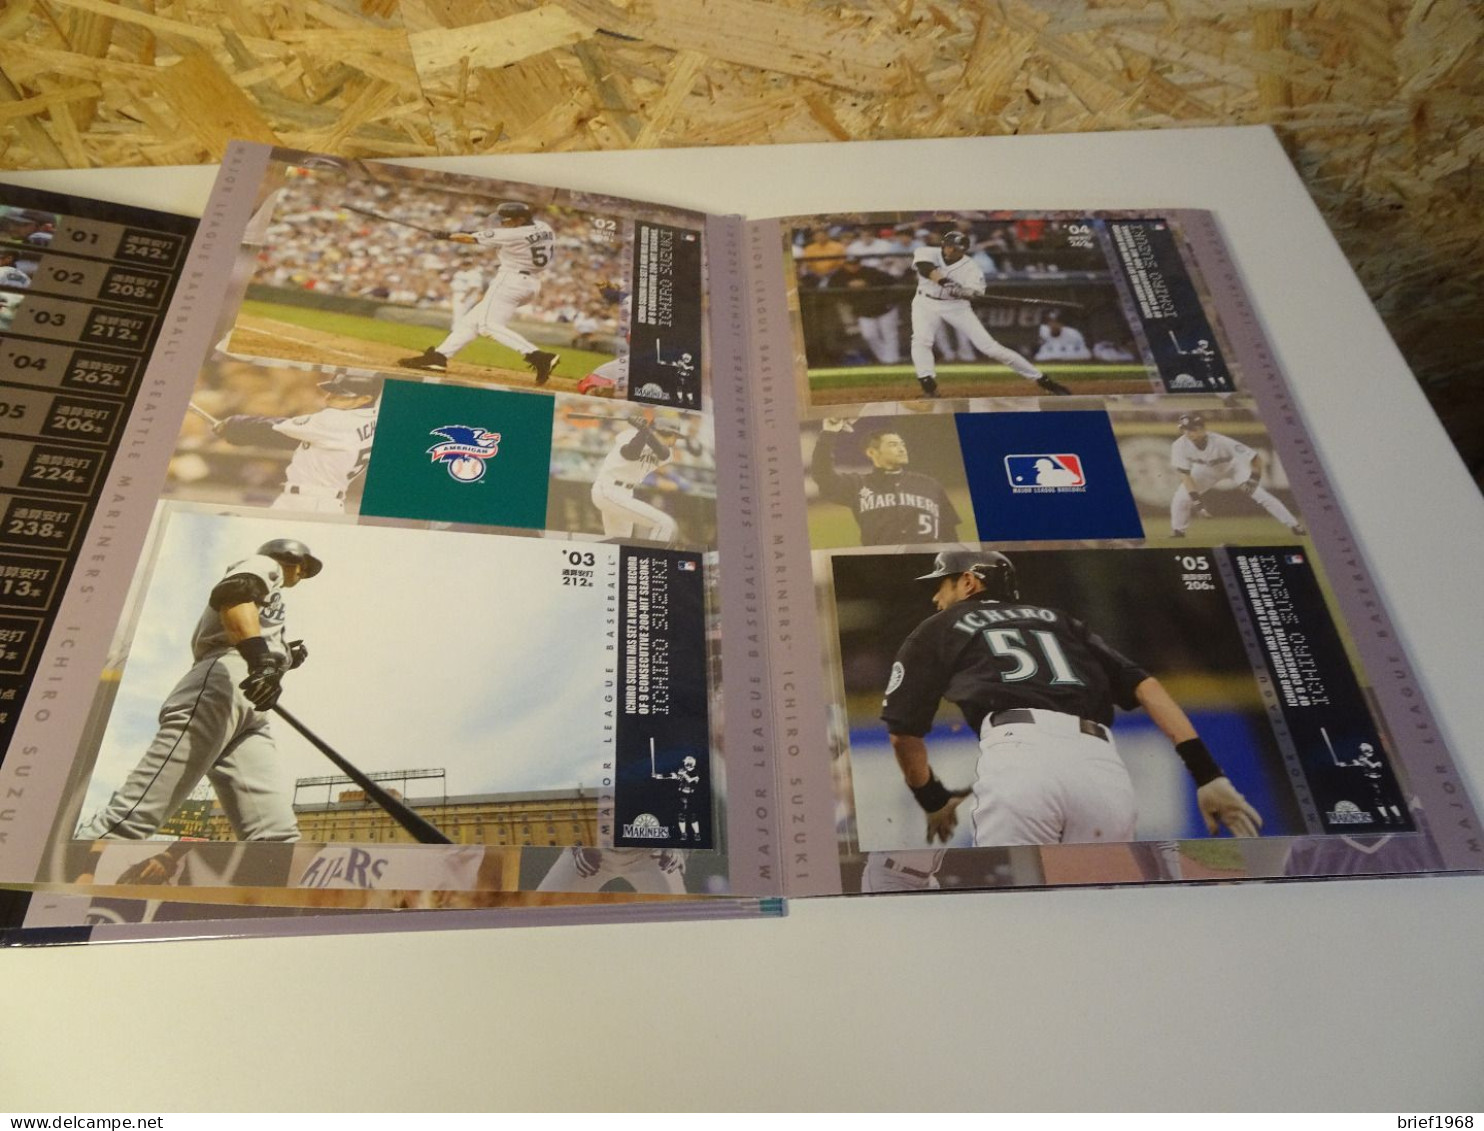 Japan Folder Baseball 2009 (25784) - Nuovi